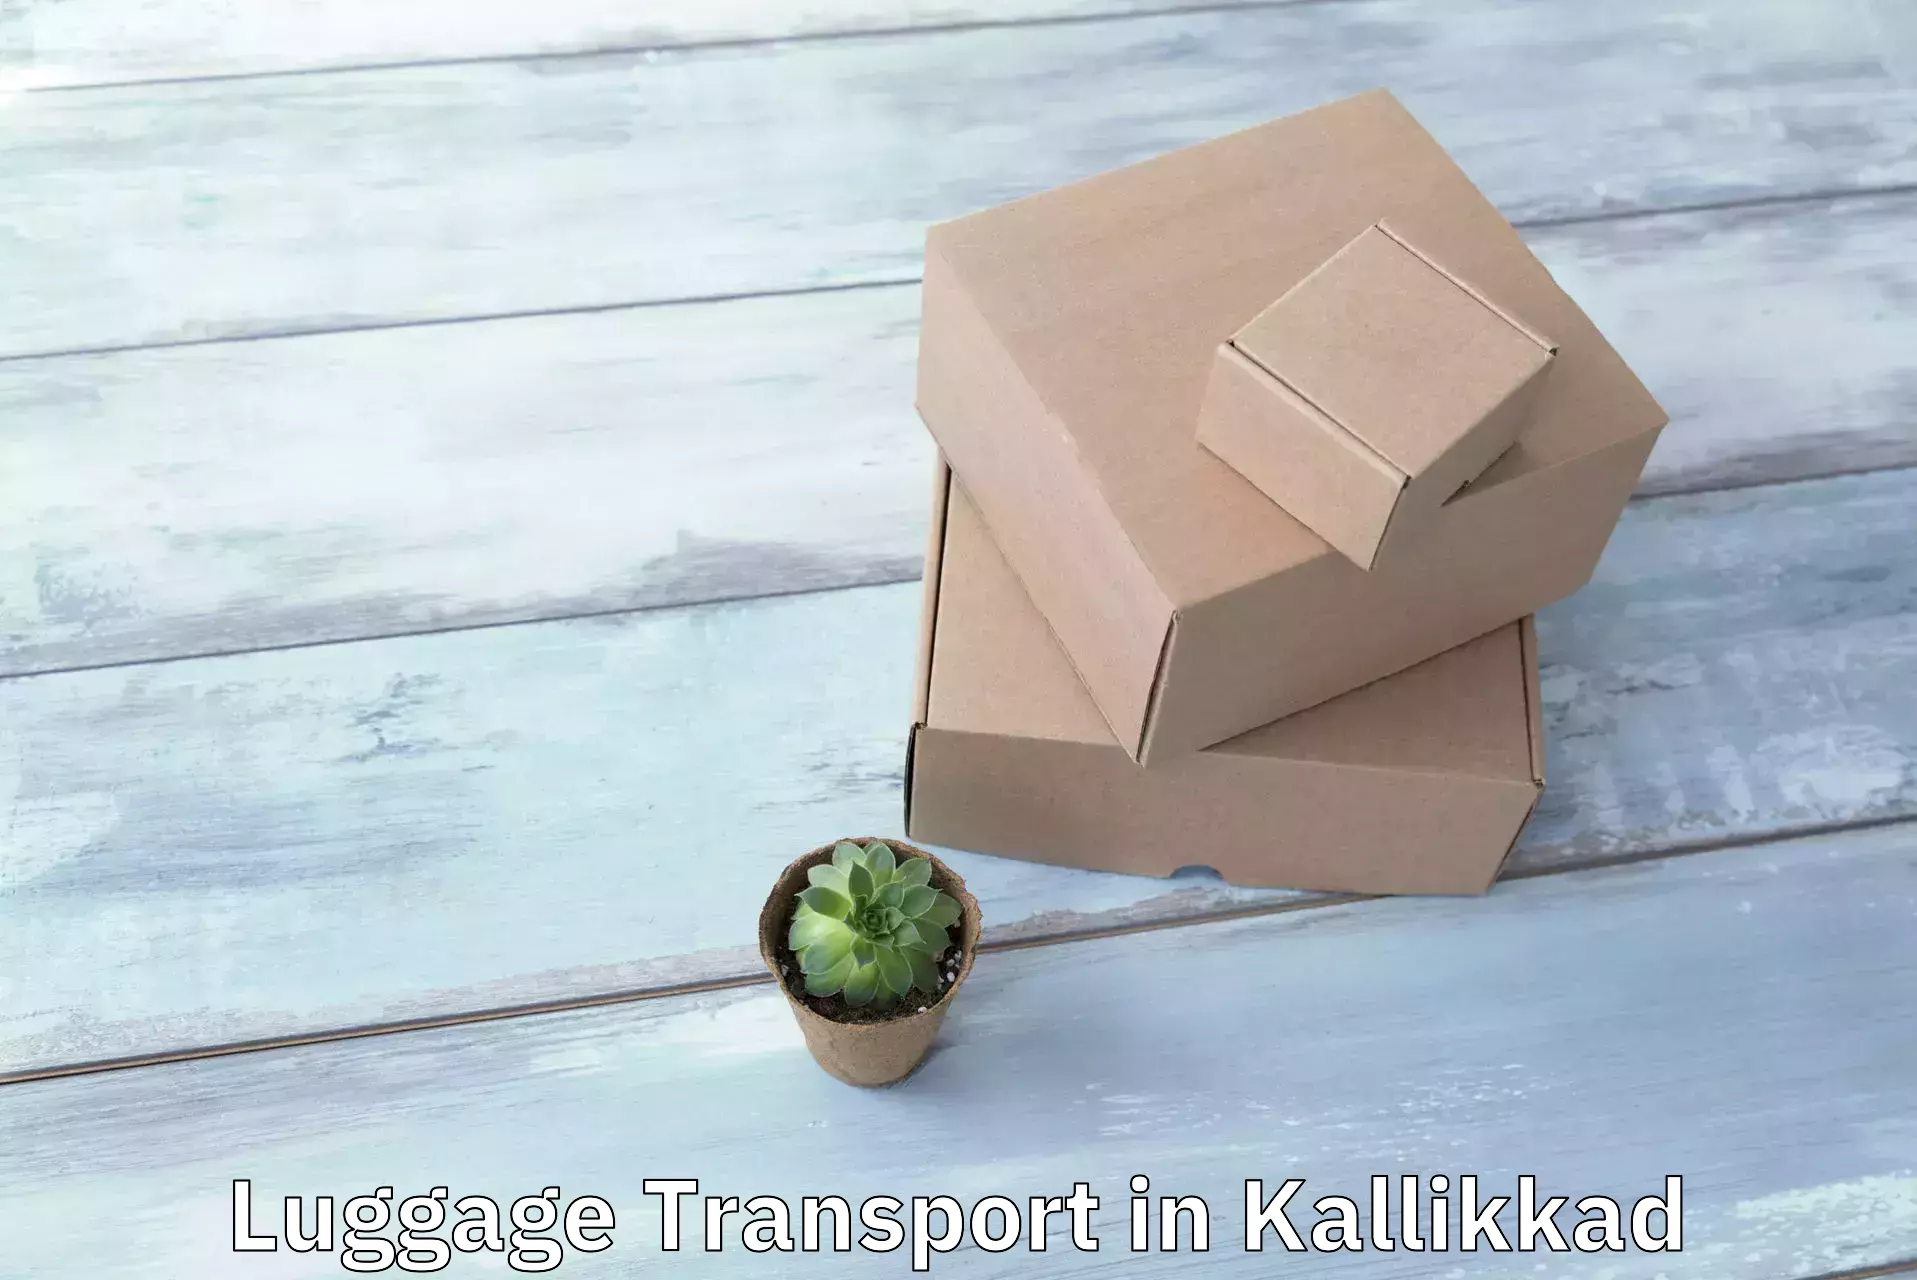 Excess baggage transport in Kallikkad